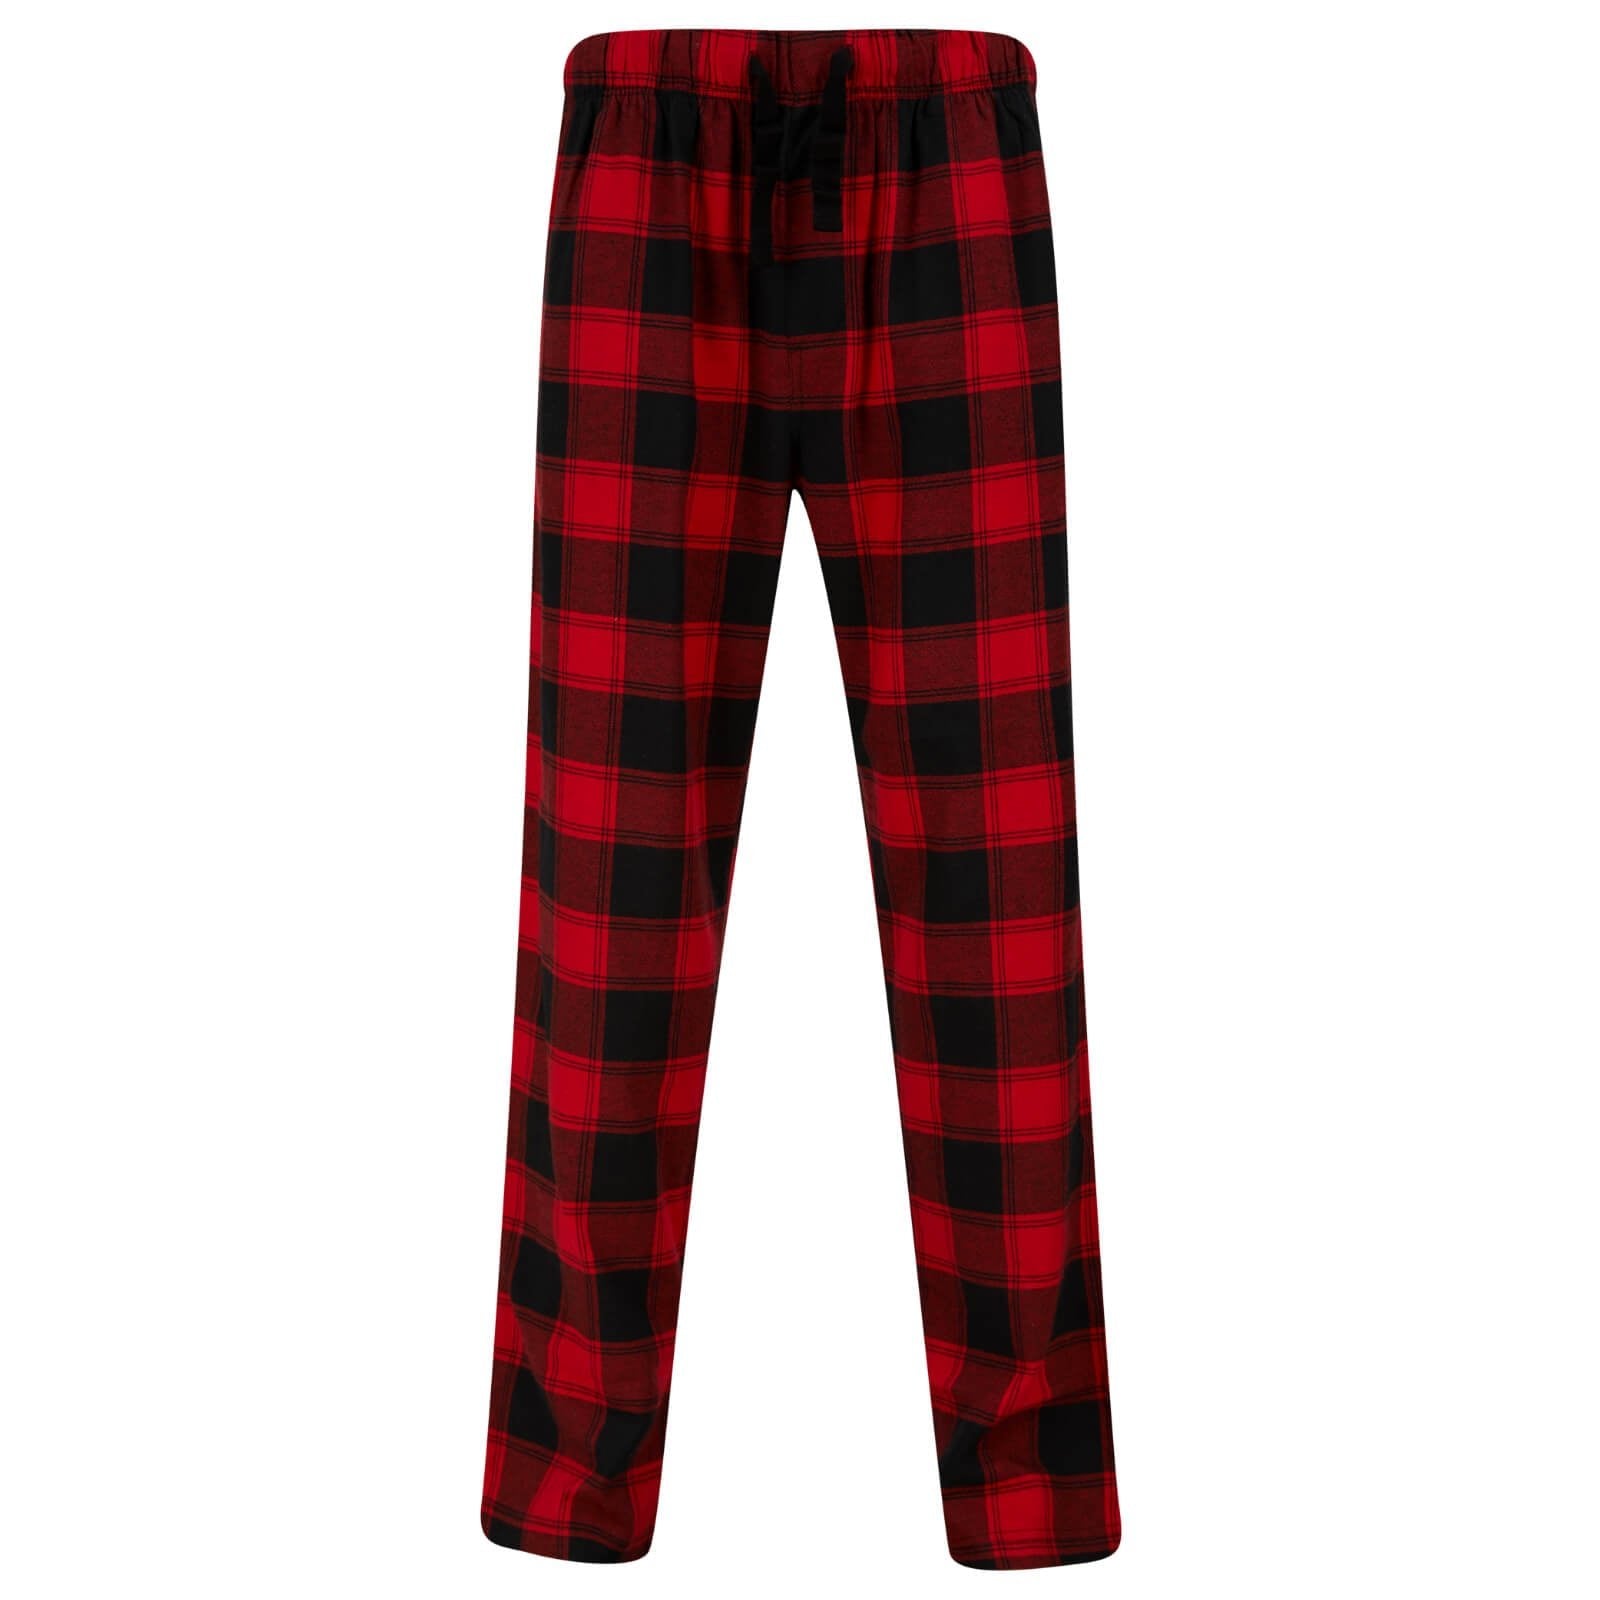 Mr Crimbo Mens Christmas Pyjama Set Santa Pocket/Check Bottoms - MrCrimbo.co.uk -SRG1Q17452_A - Black/Red -Black